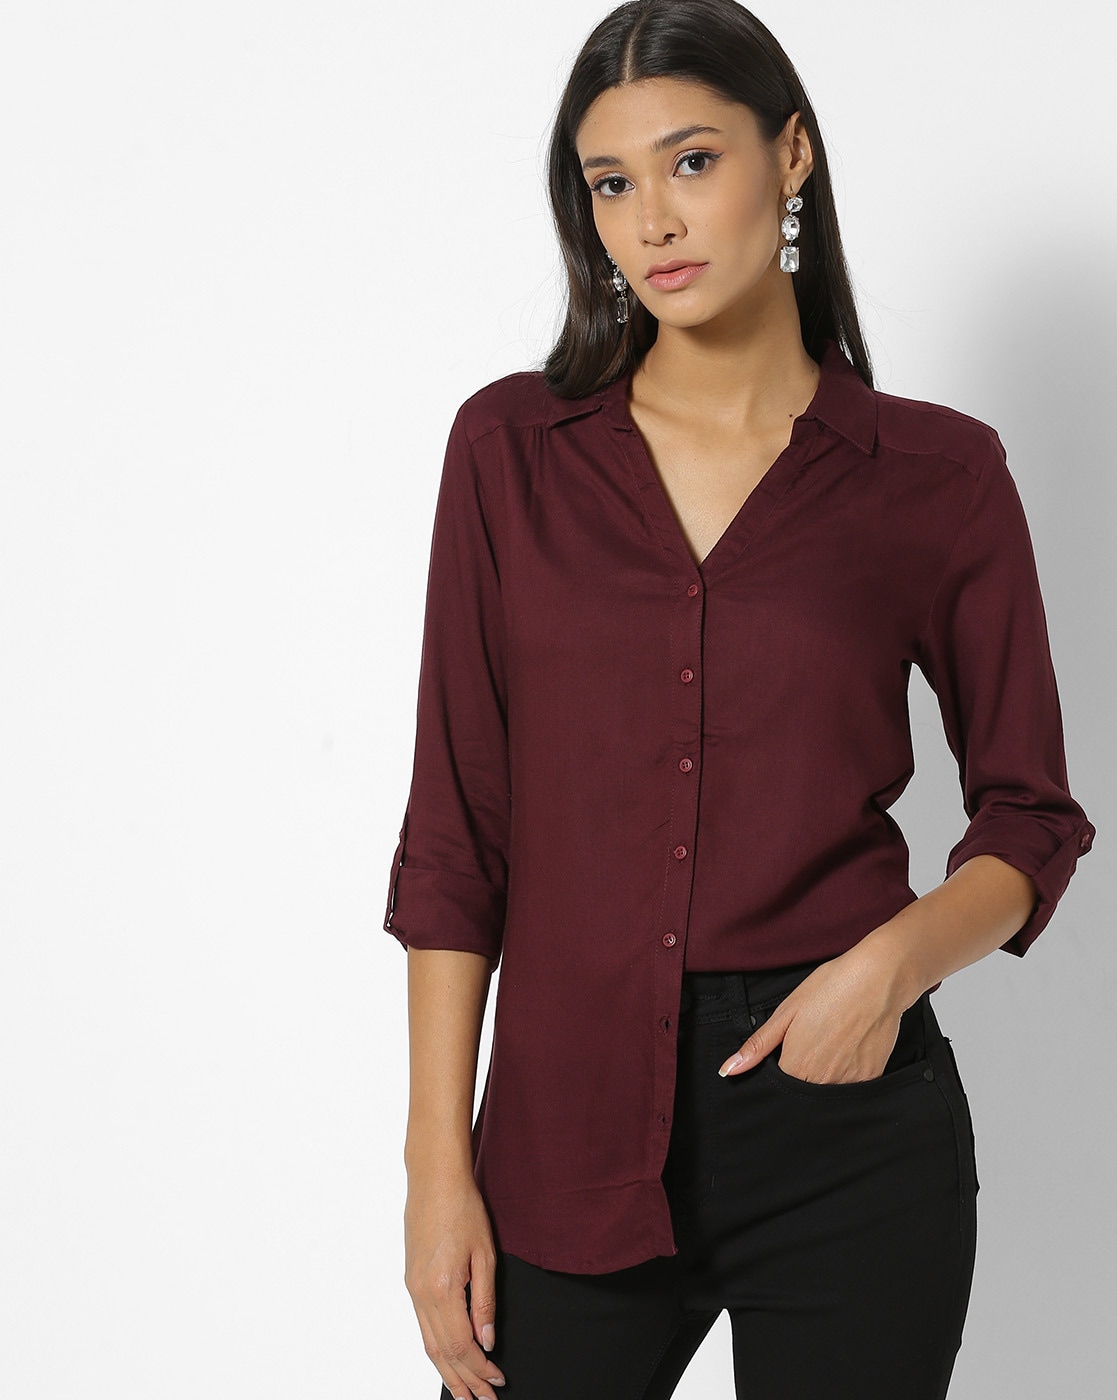 burgundy shirt for womens